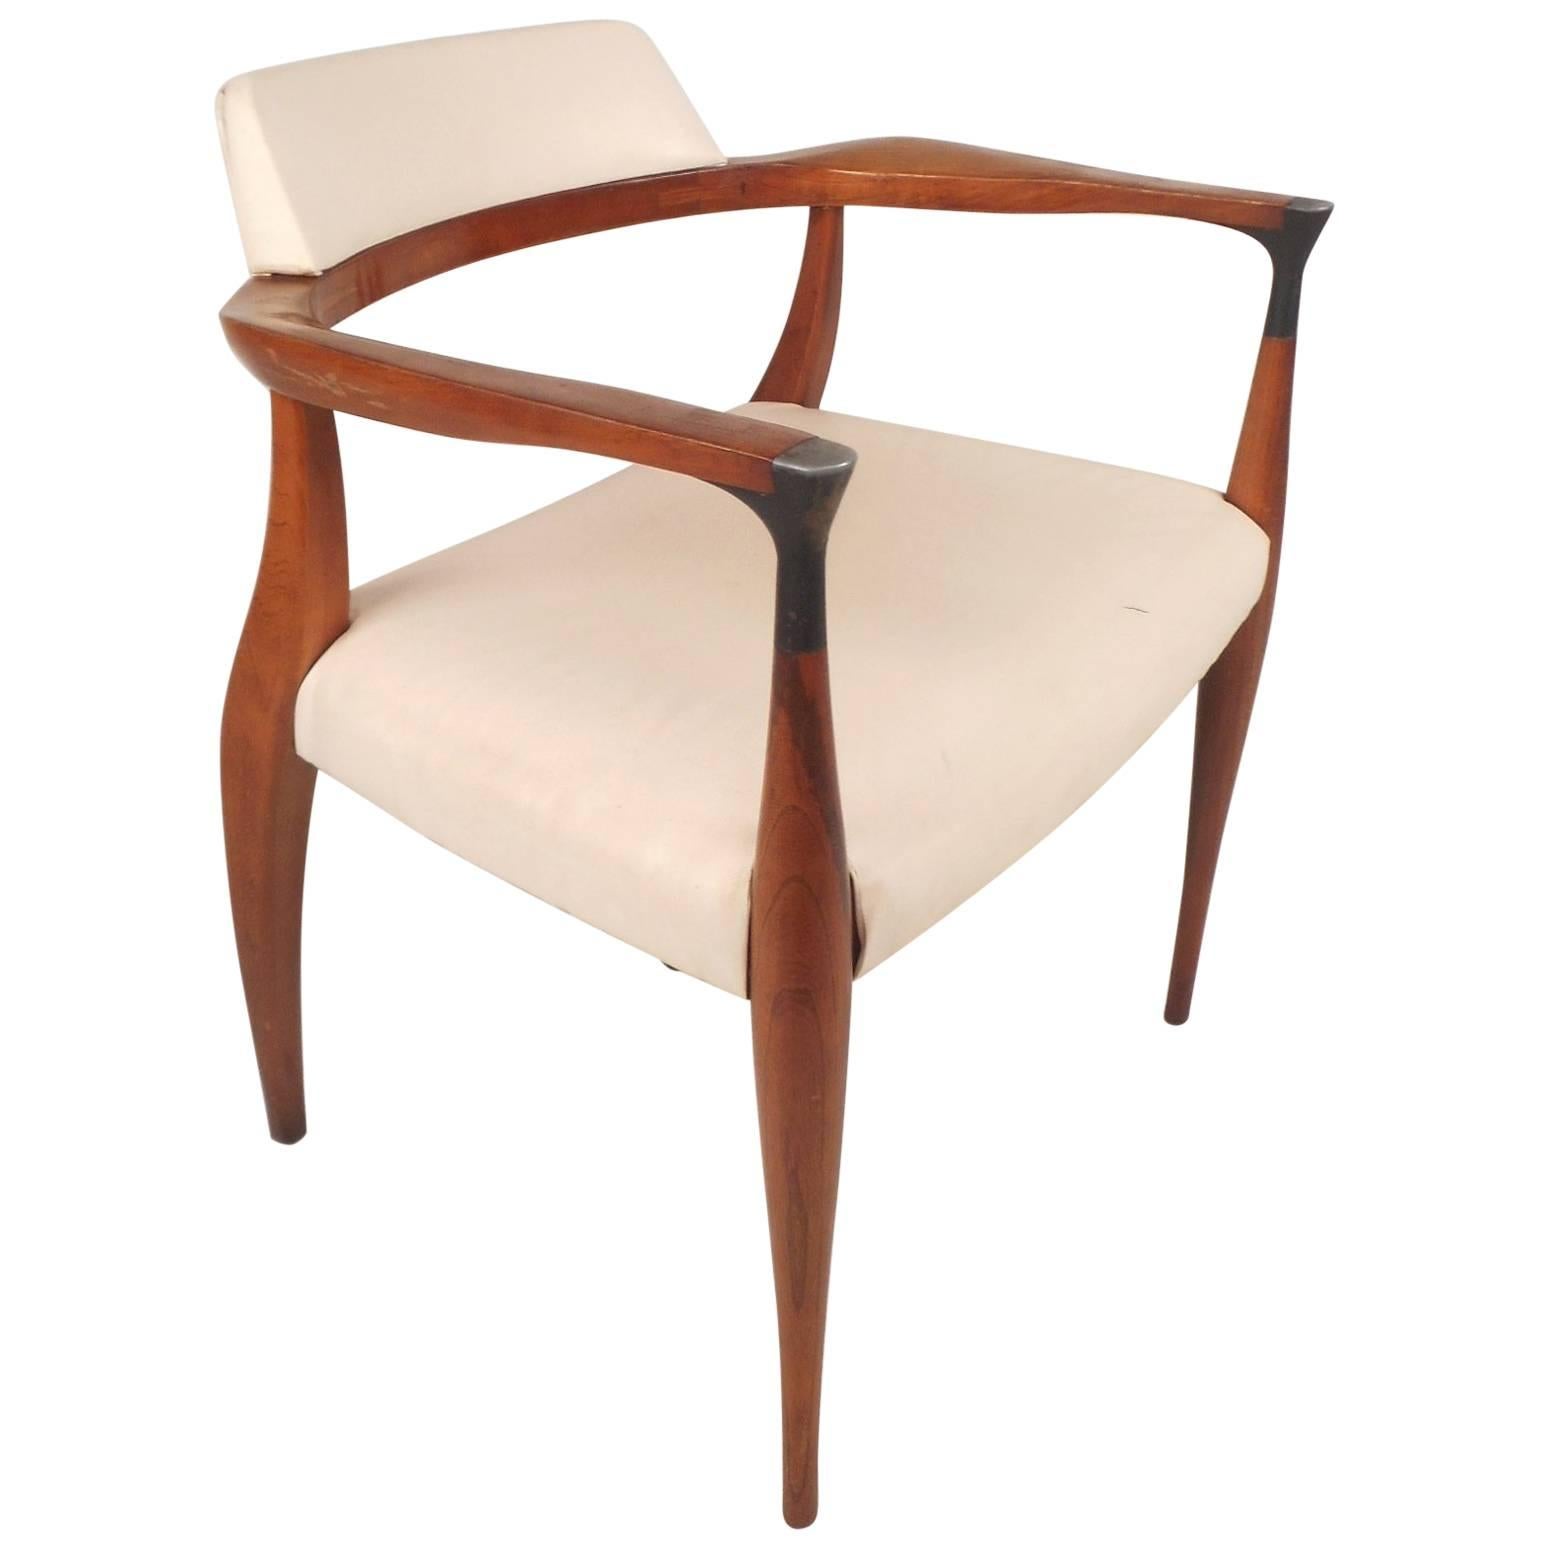 Unique Mid-Century Modern Occasional Armchair